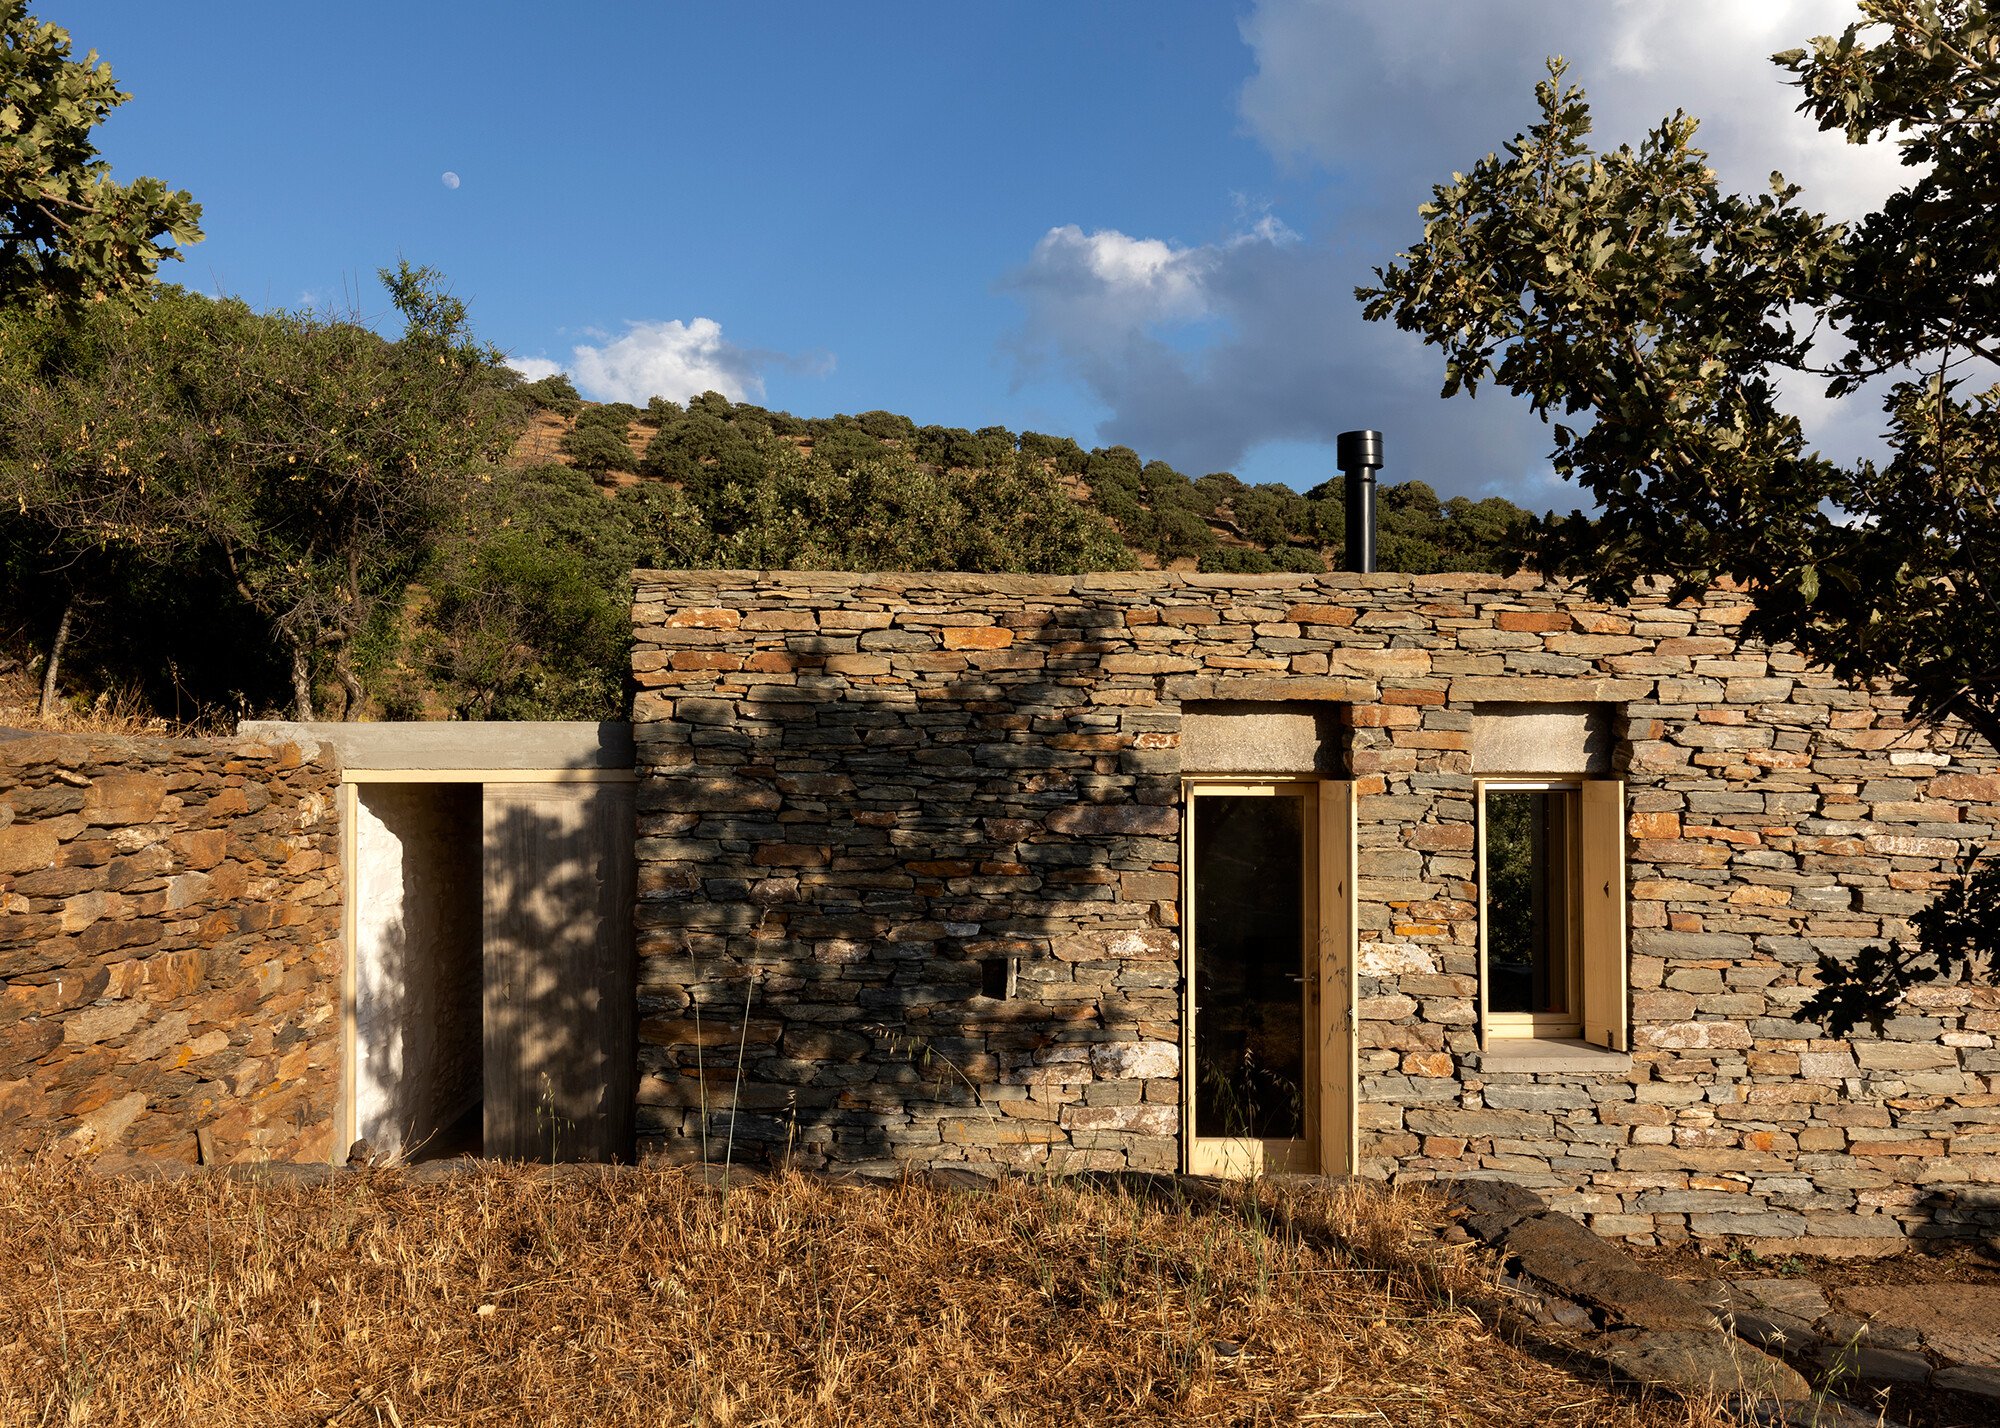 More information about "Βραβεία Αρχιτεκτονικής: Ένα πετρόχτιστο δωμάτιο με κήπο στην Κέα απέσπασε το βραβείο Αρχιτεκτονικής ΕΙΑ"